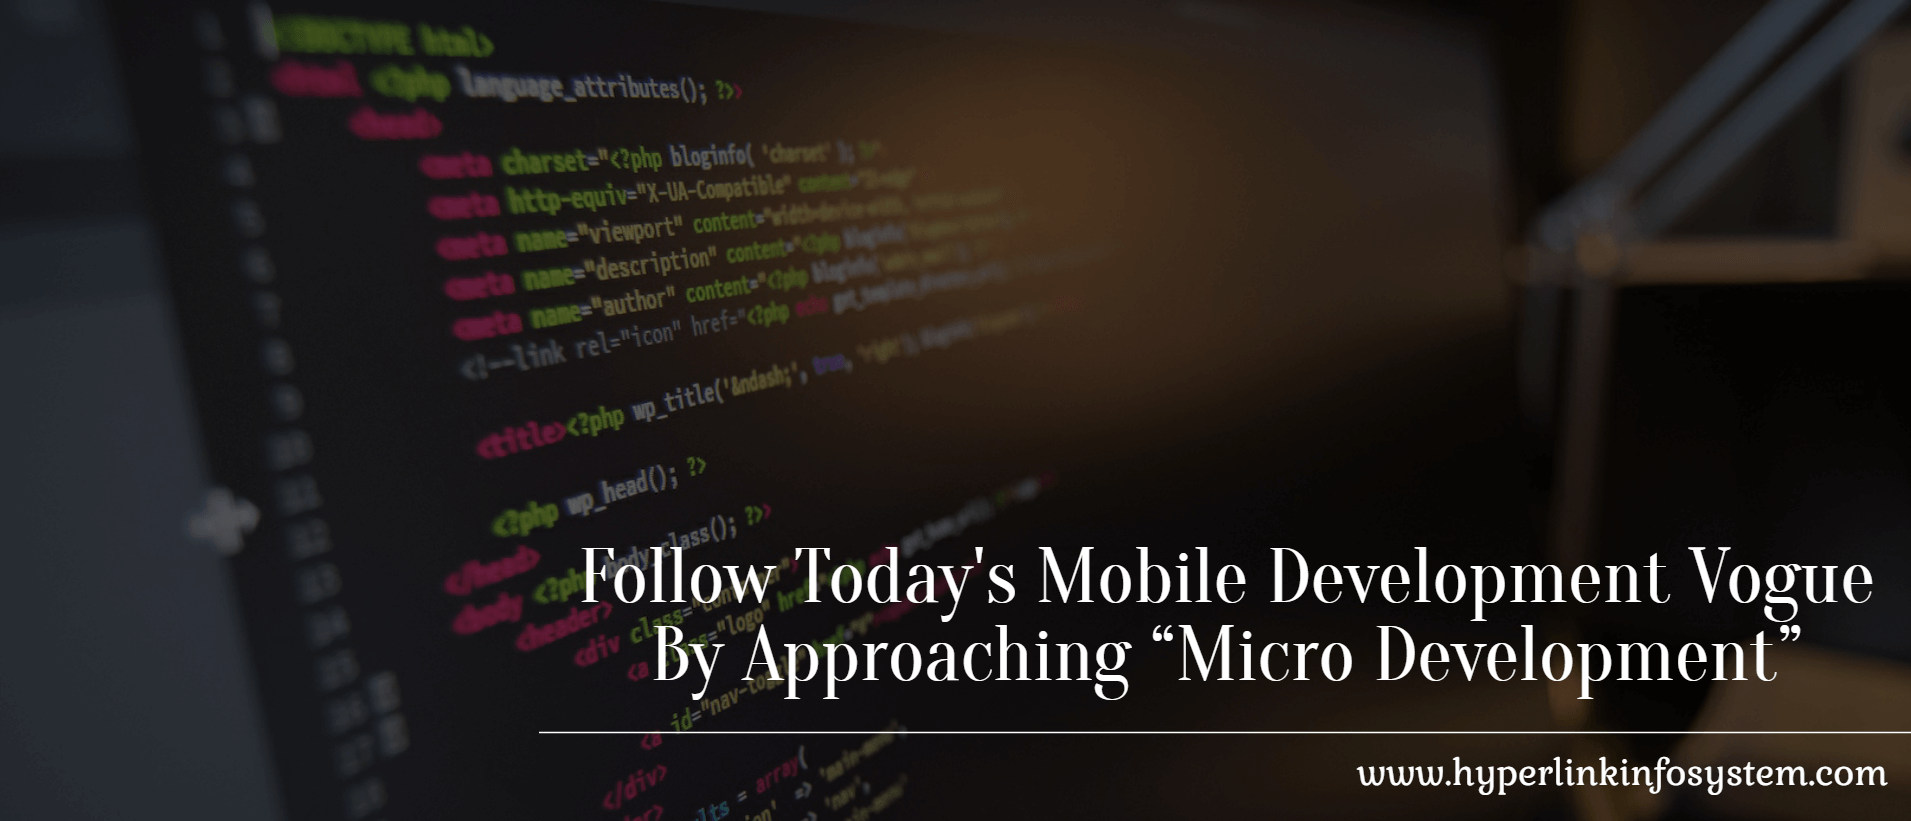 mobile development vogue by micro development